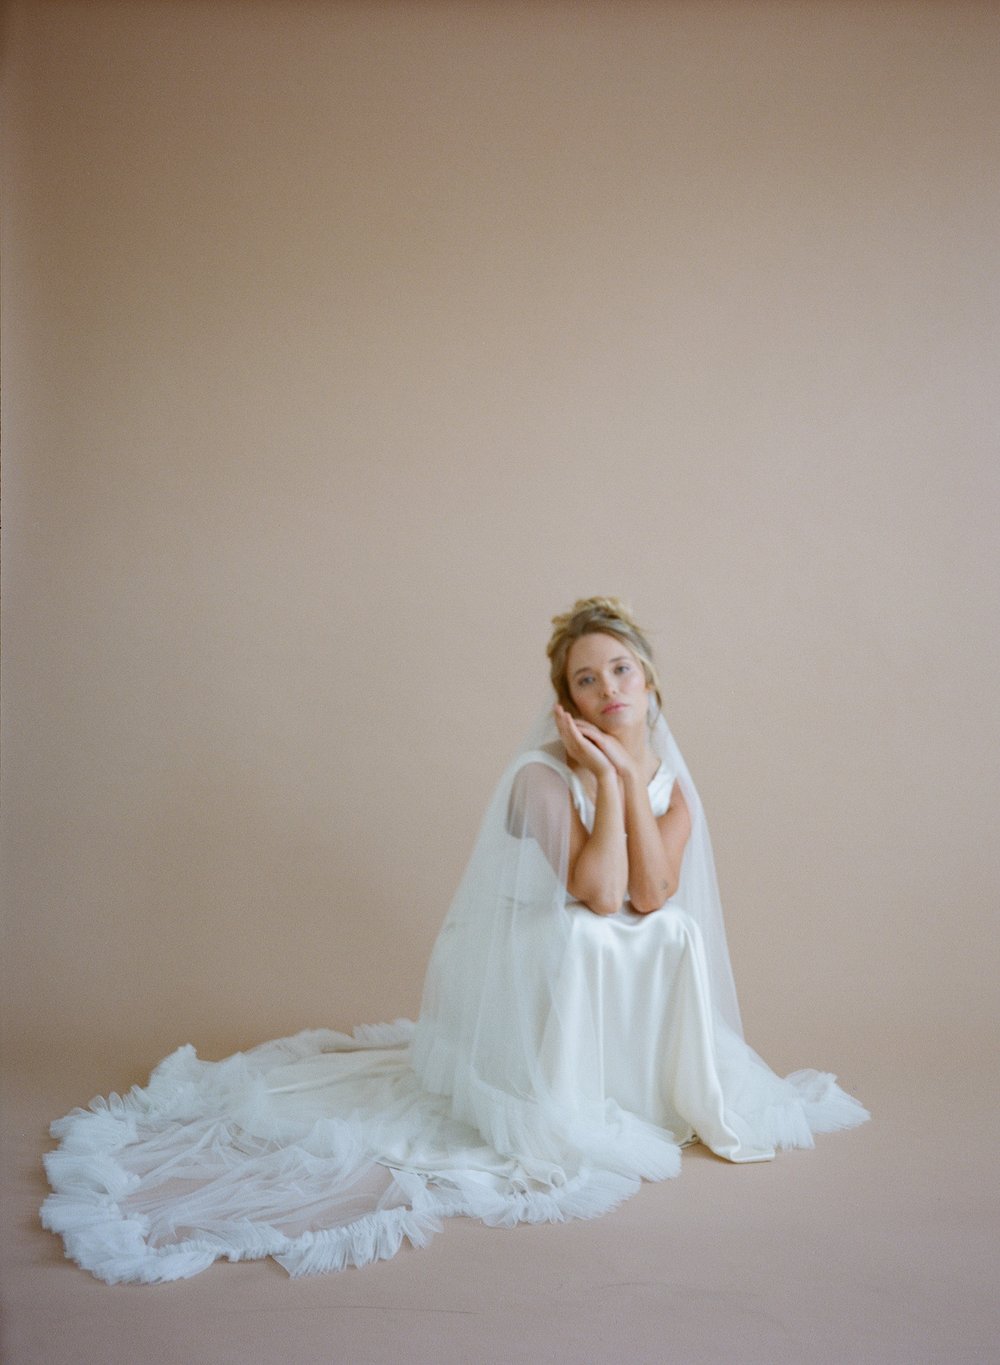 Analogue-shoot-Hollie-Cornish-photographer-Kate-Beaumont-wedding-gowns-Sheffield-46.jpg